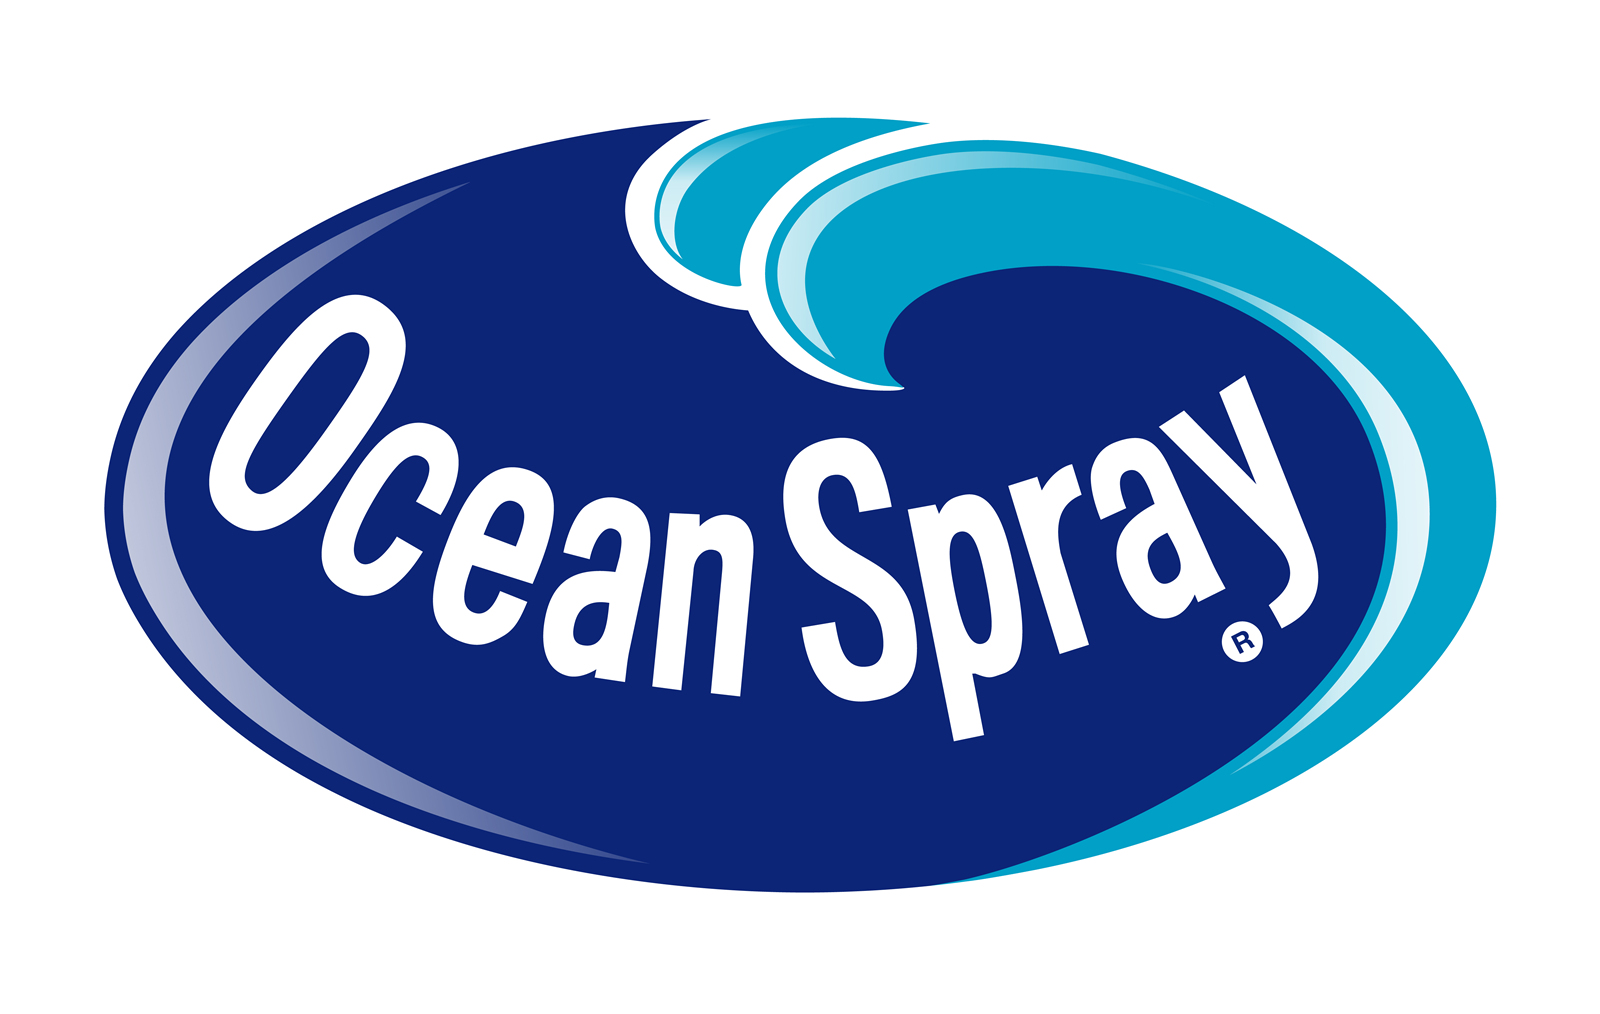 [oceanspray_logo.jpg]